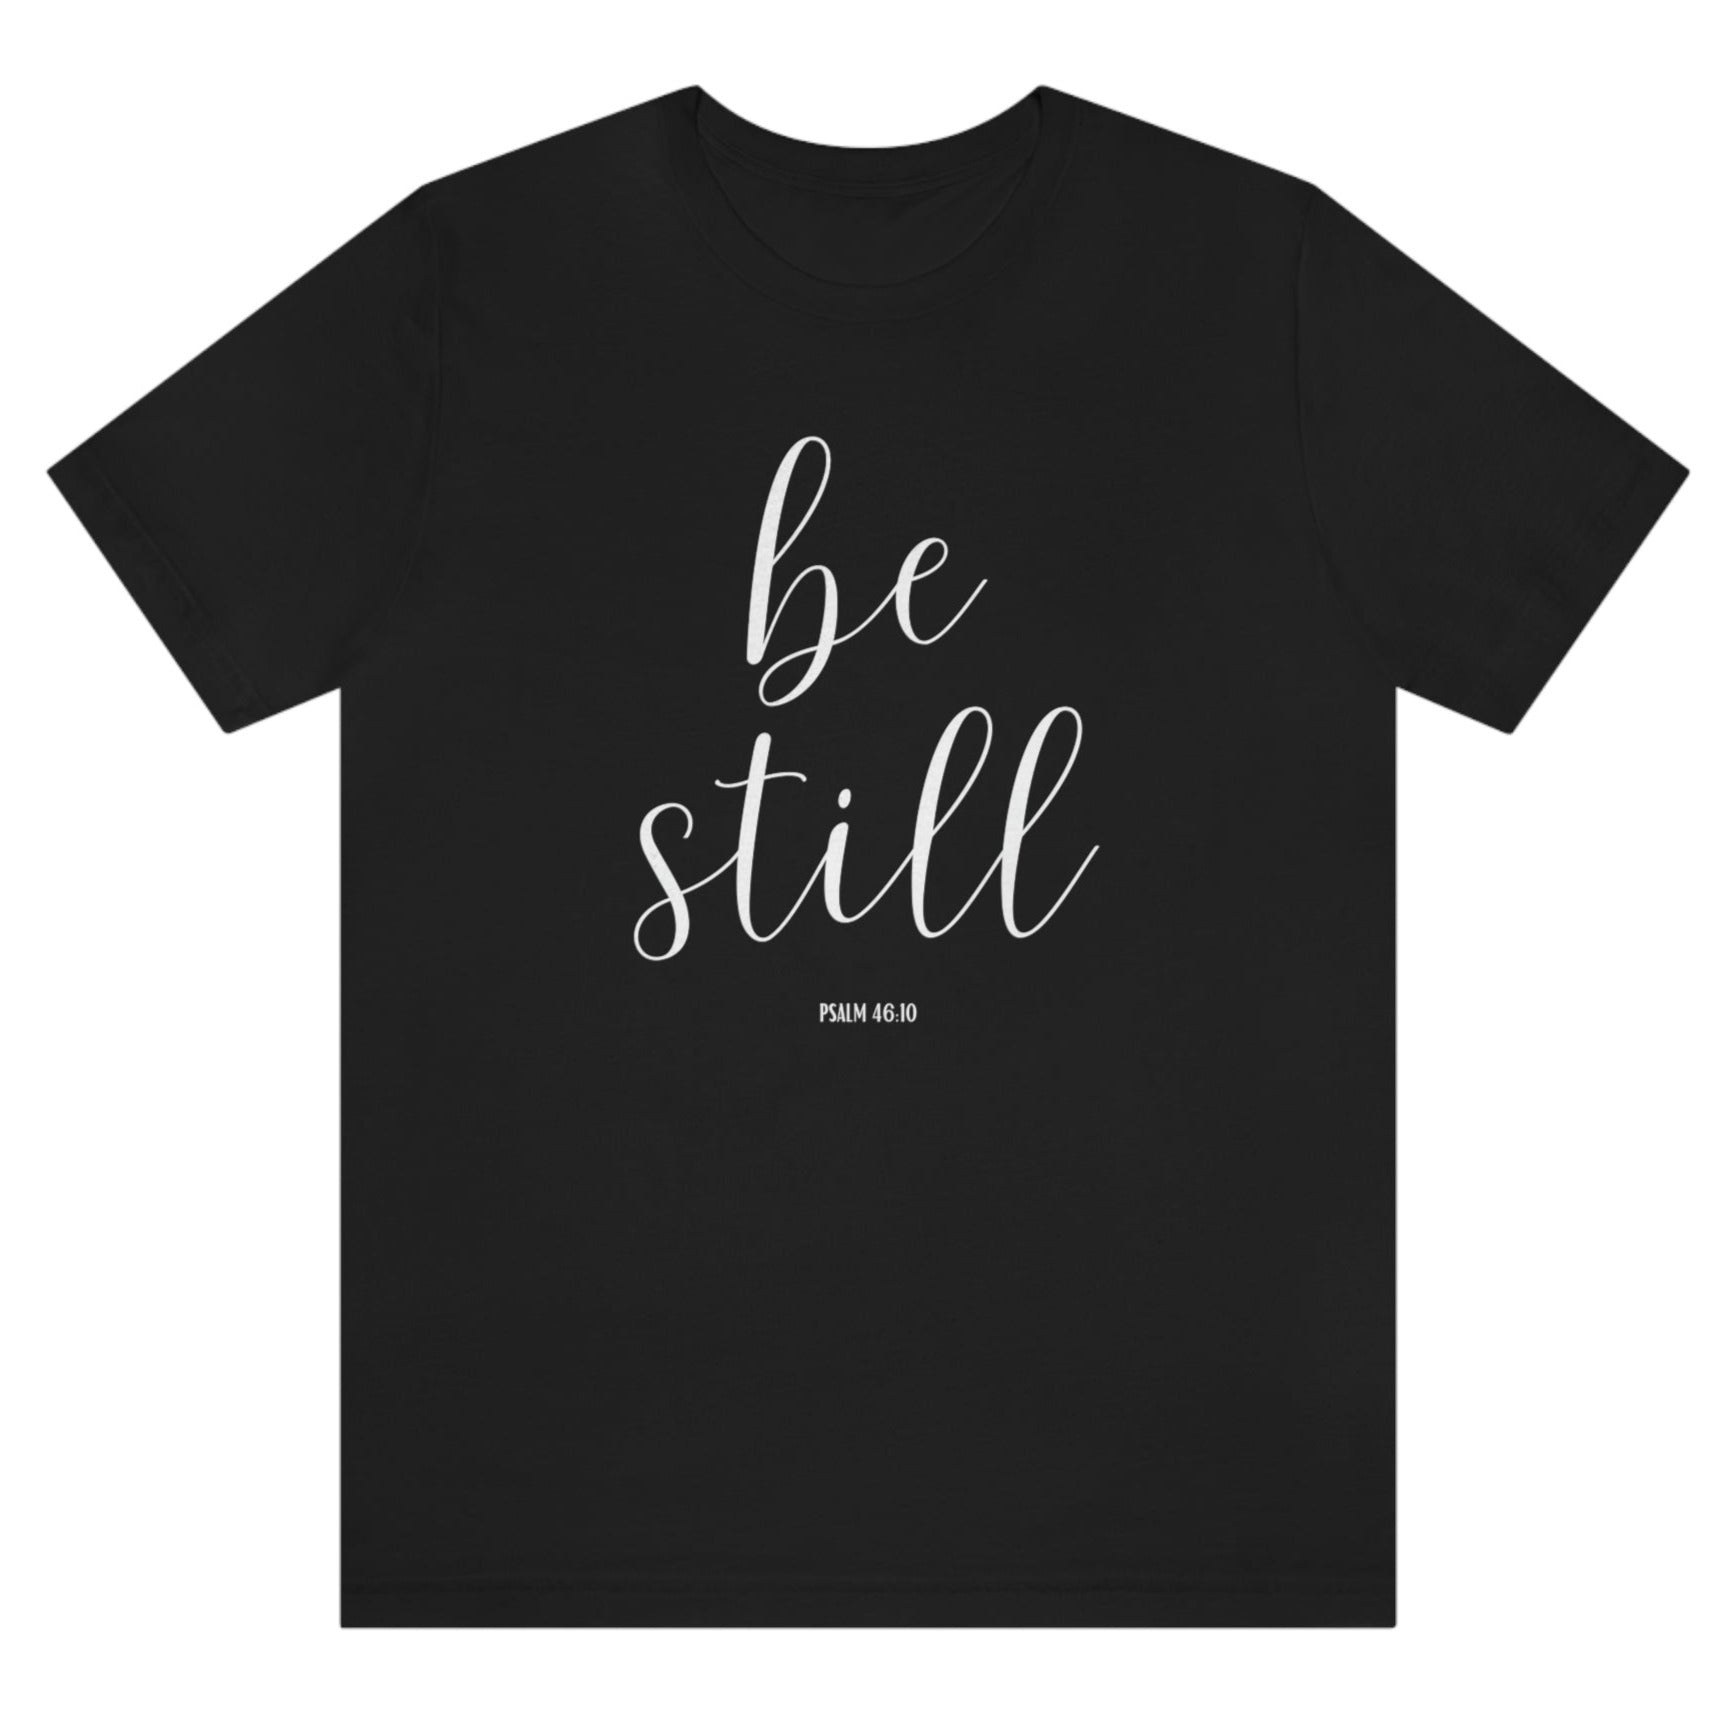 be-still-psalm-46-10-black-t-shirt-womens-christian-inspiring